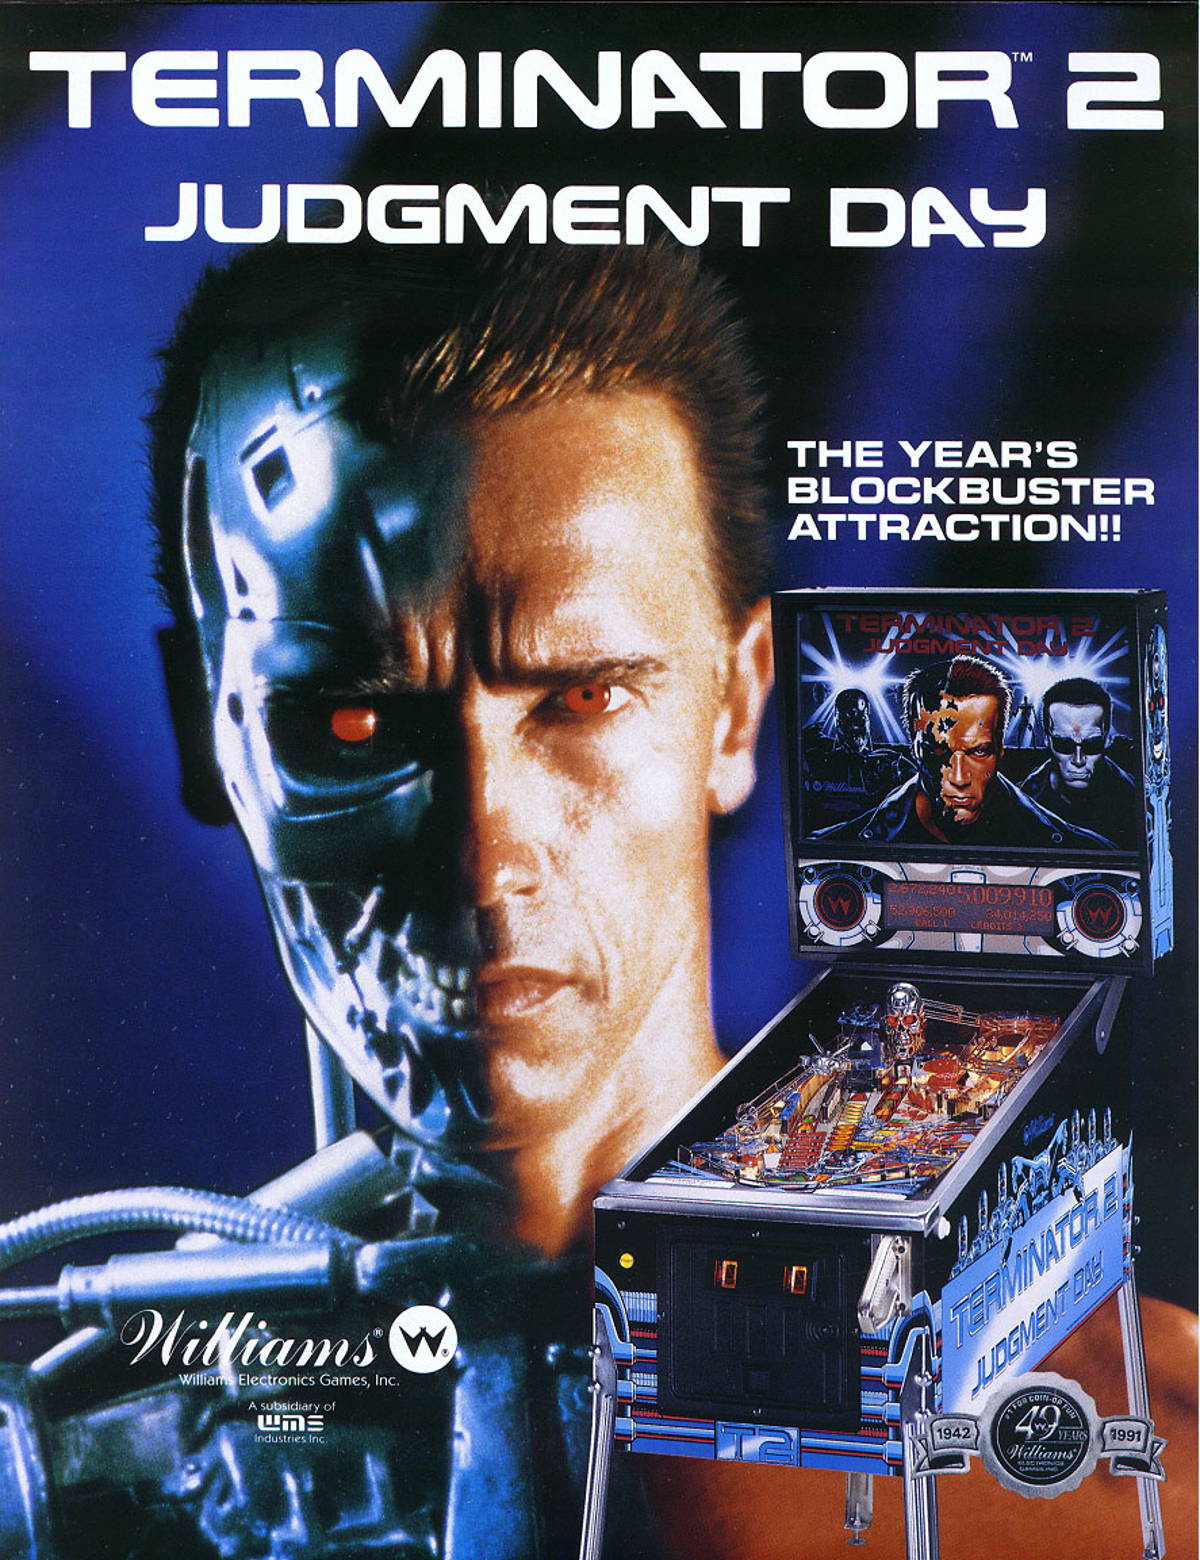 Terminator judgment day игра. The Terminator игра 1991. Терминатор 2. Судный день Terminator 2. Judgment Day (1991). Игра Терминатор 2 Судный день. Terminator 2 Judgment Day игра 1991.